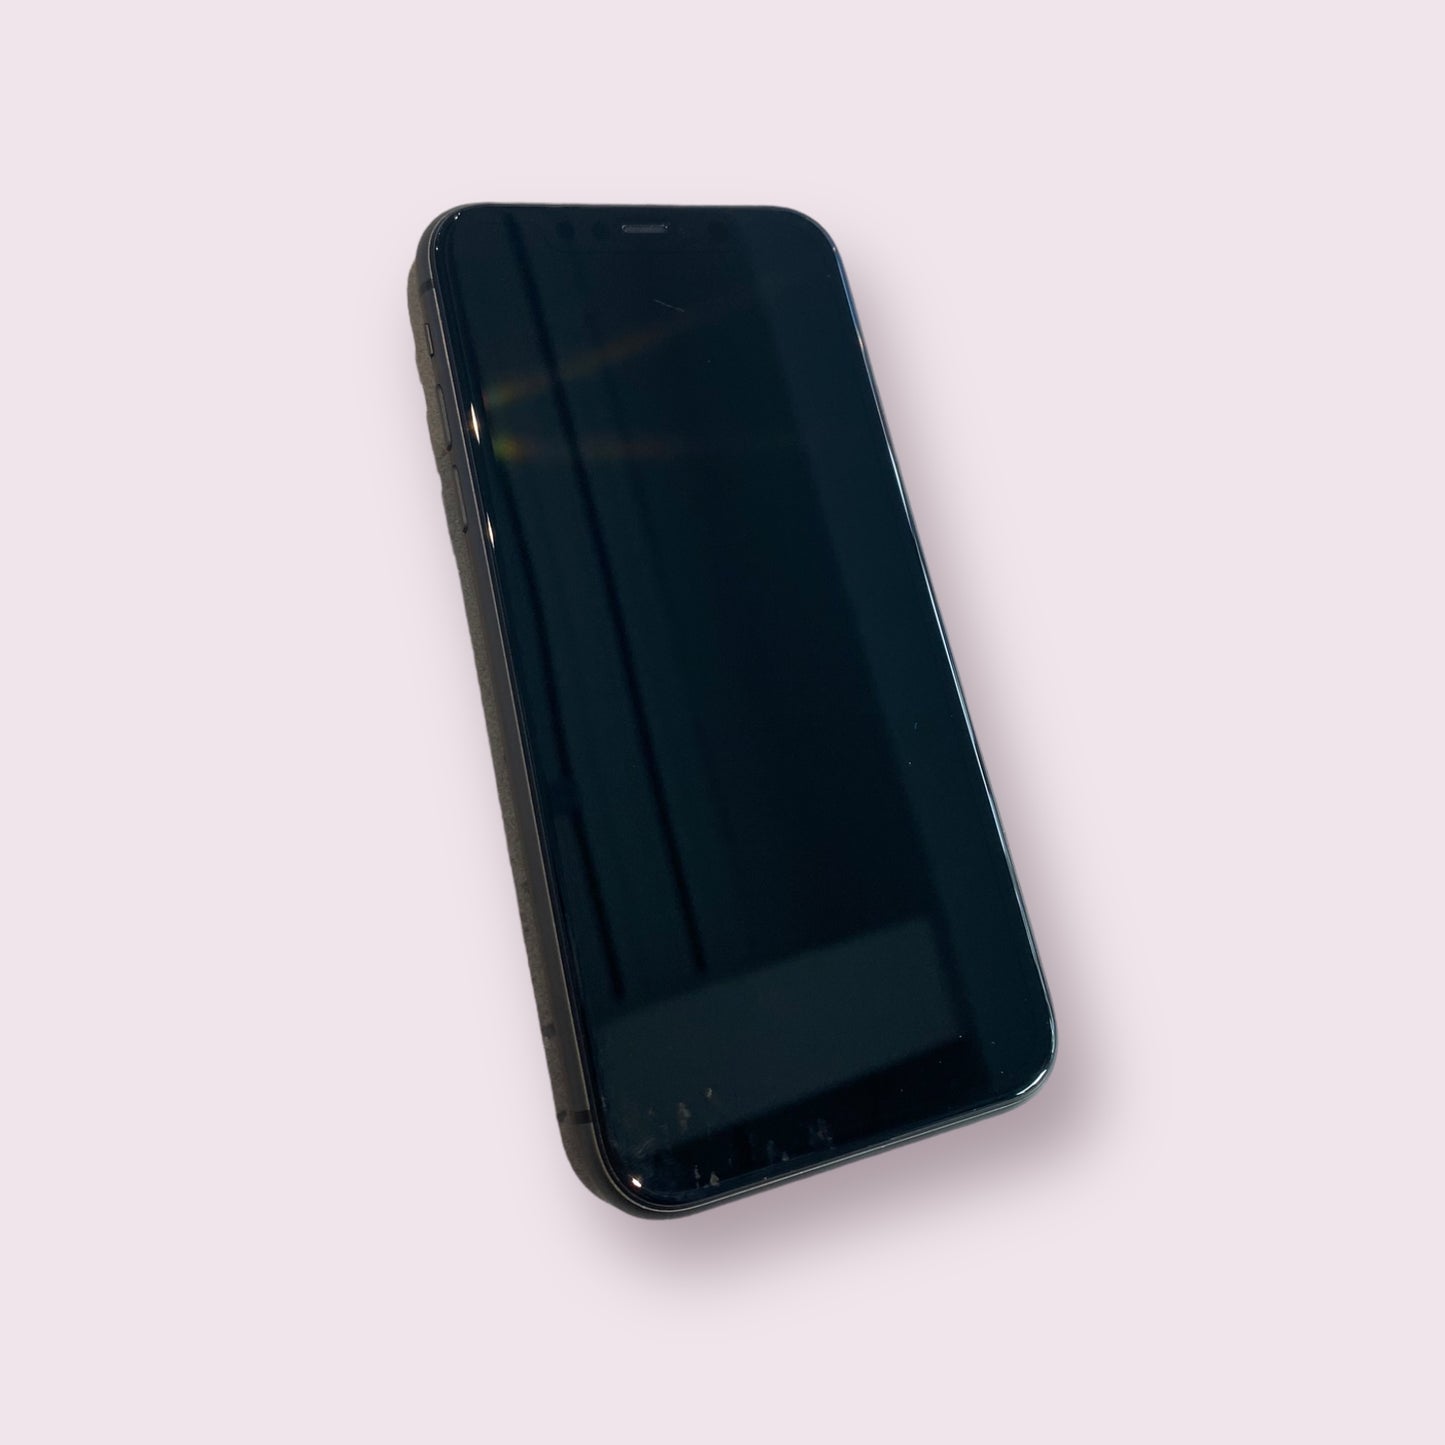 Apple iPhone 11 64GB Black - Unlocked - Grade A